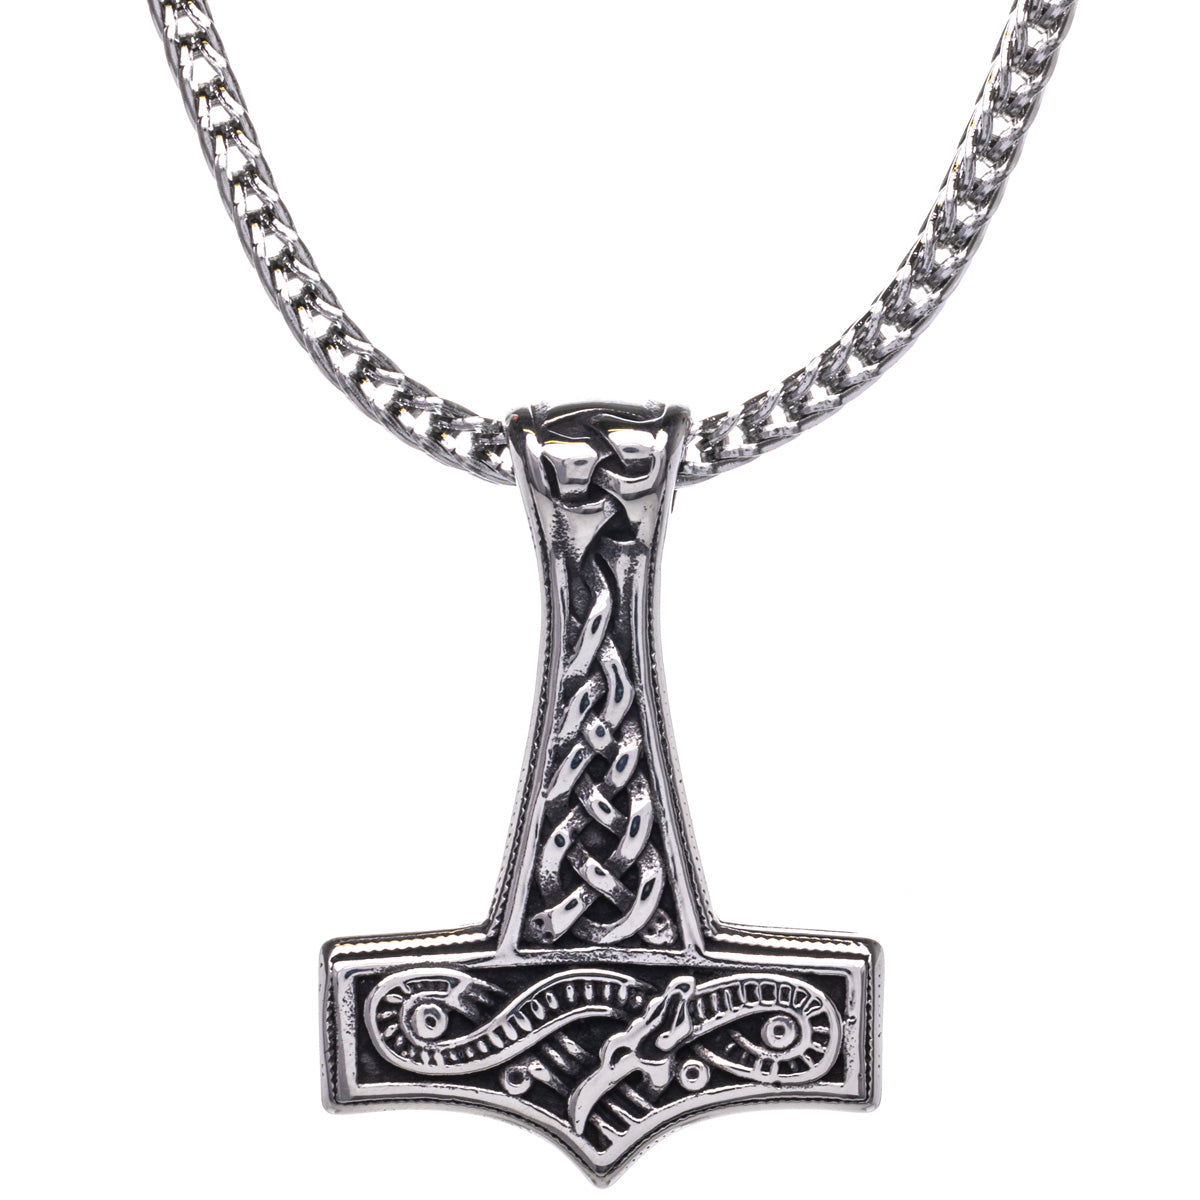 Steel Dragon Mjölnir Thor's hammer pendant necklace (Steel 316L)